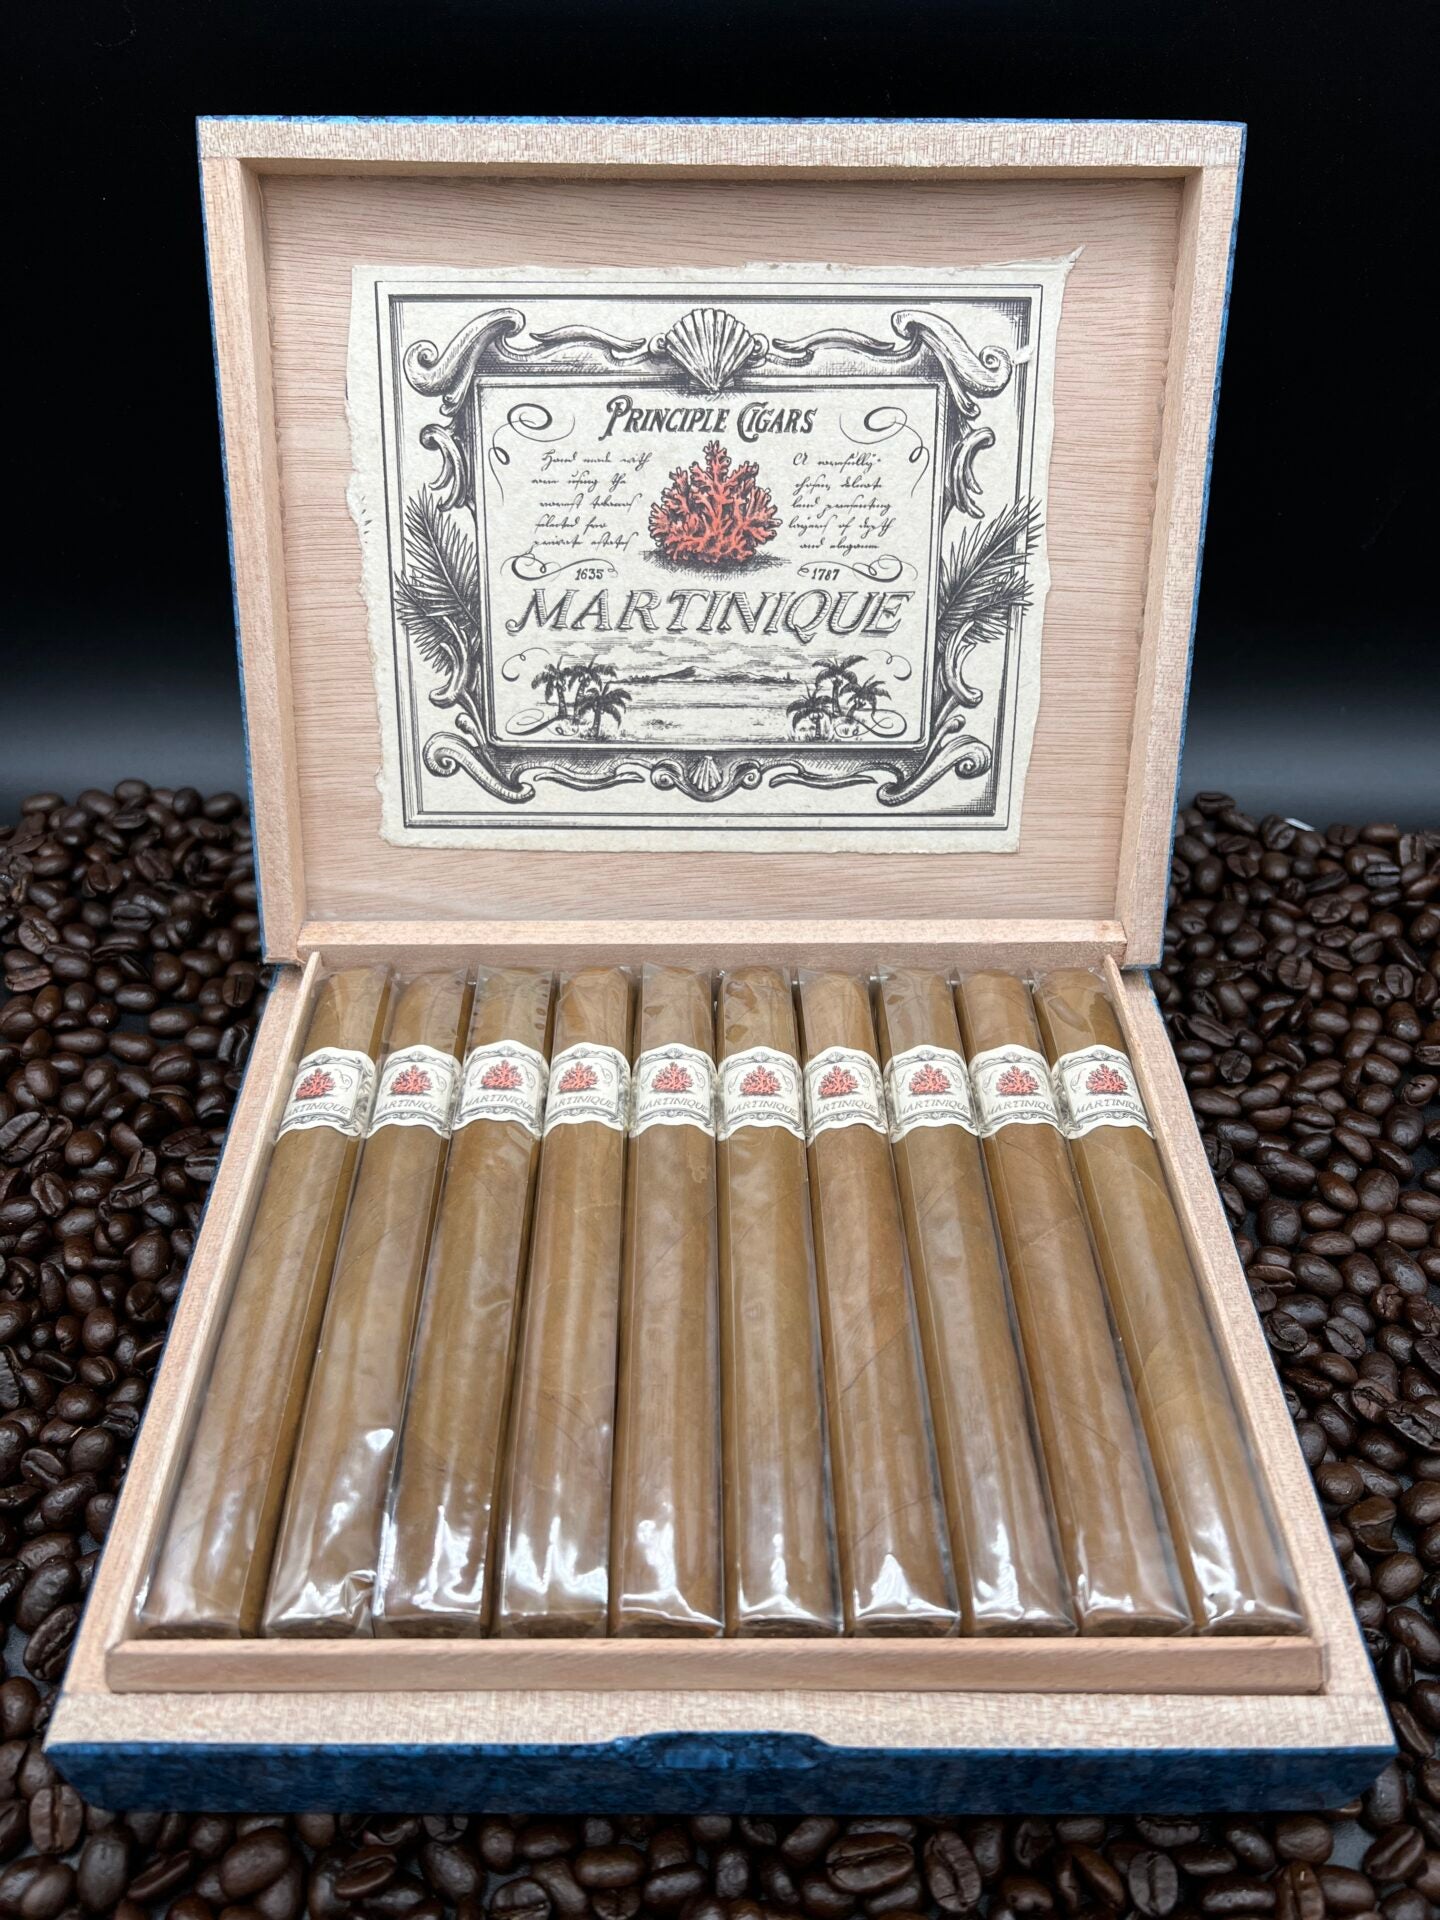 Principle Cigars - Martinique Corona Gorda cigars supplied by Sir Louis Cigars